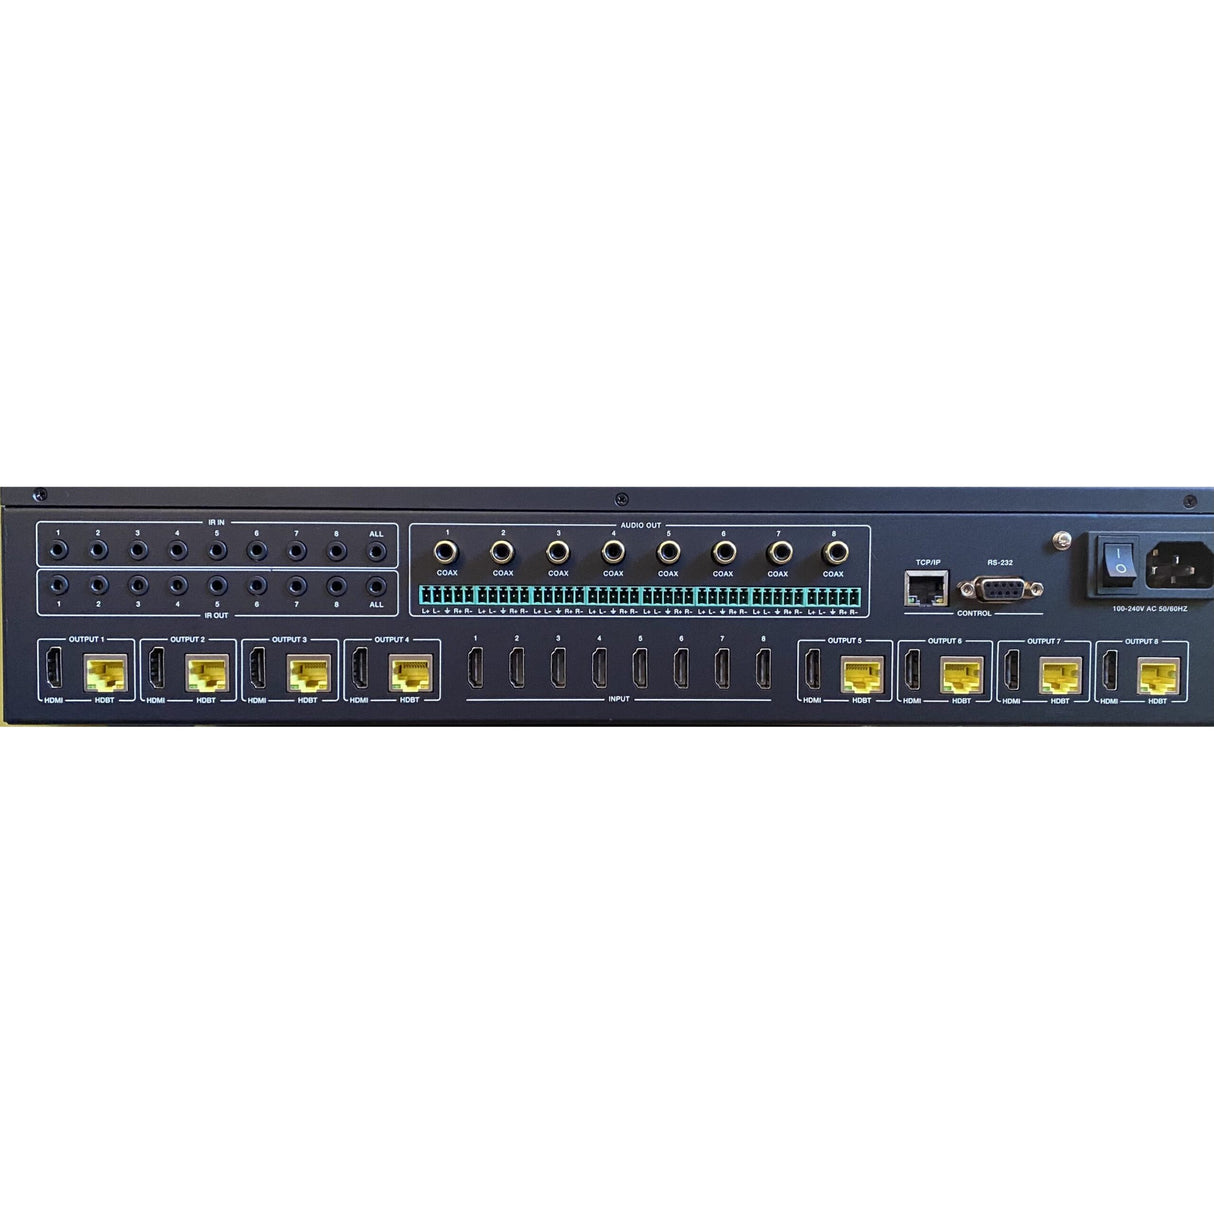 PureLink HTX III-8800 8 x 8 4K60 HDMI to HDBaseT/HDMI Matrix Switcher